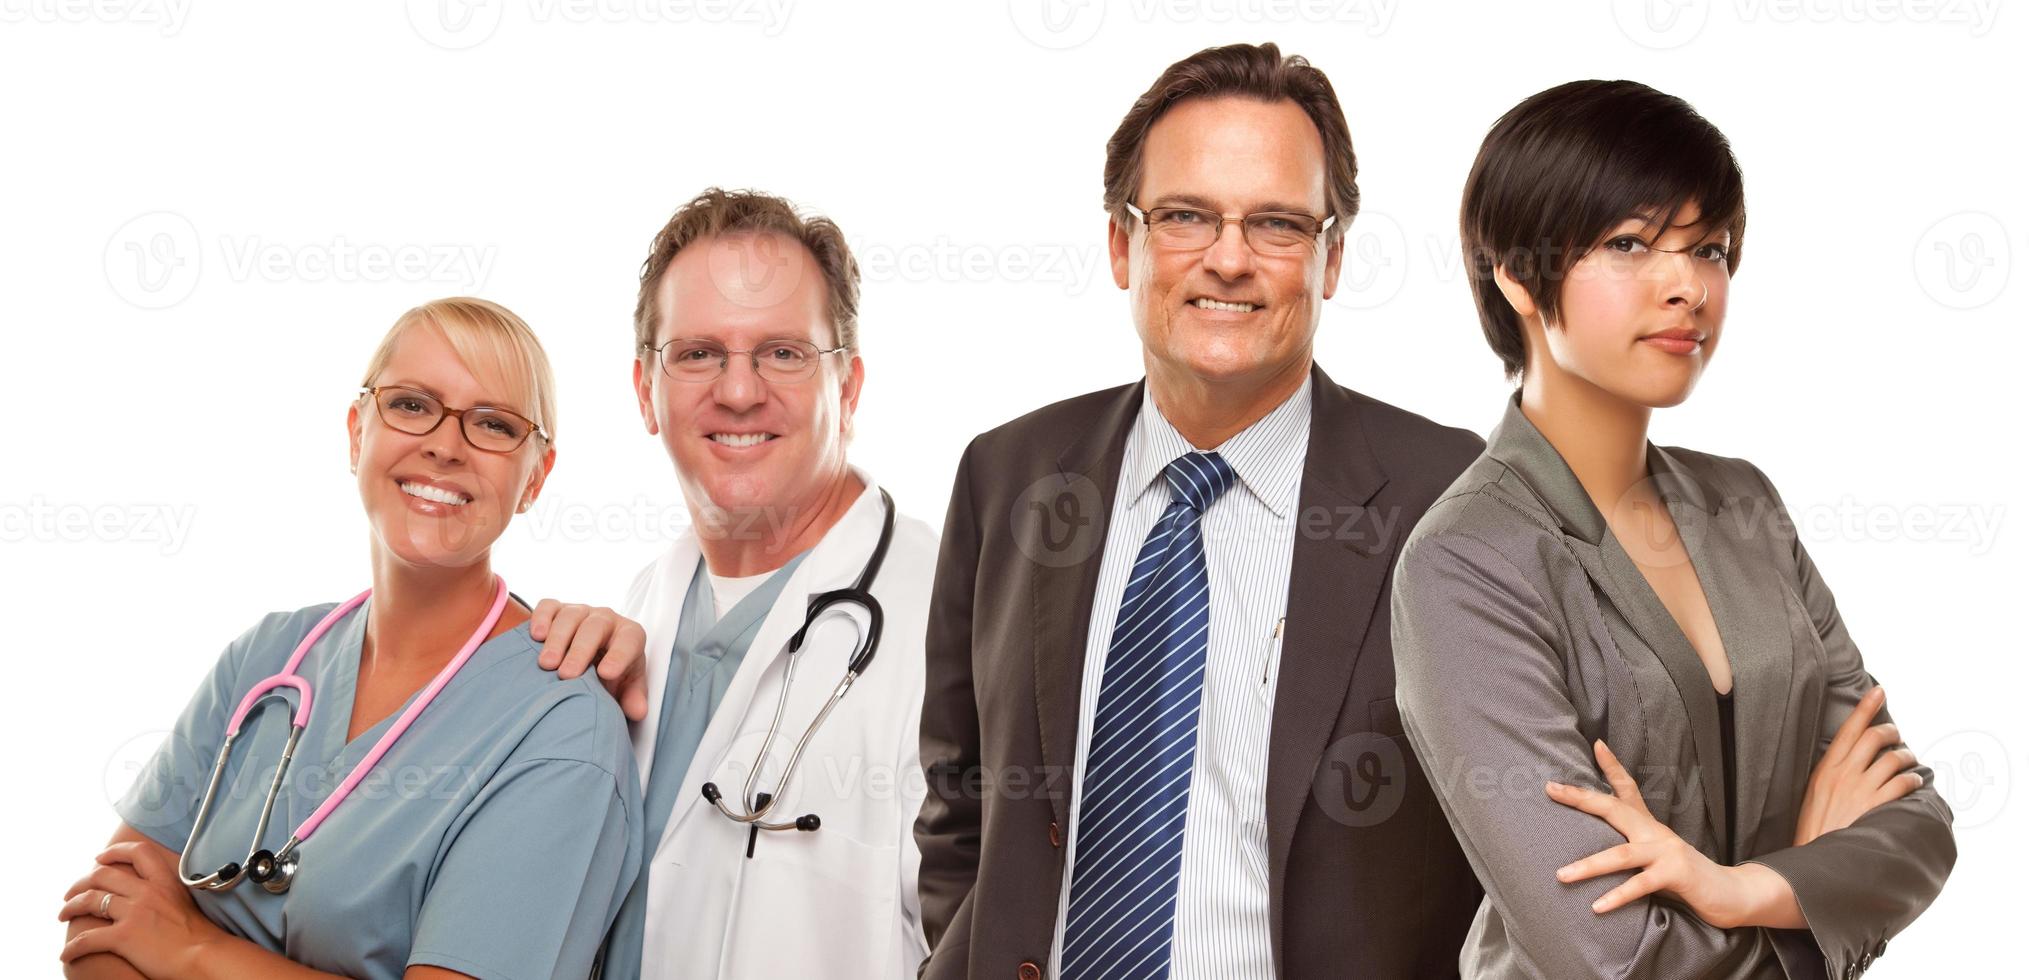 gemengd ras Dames en zakenman met artsen of verpleegsters foto